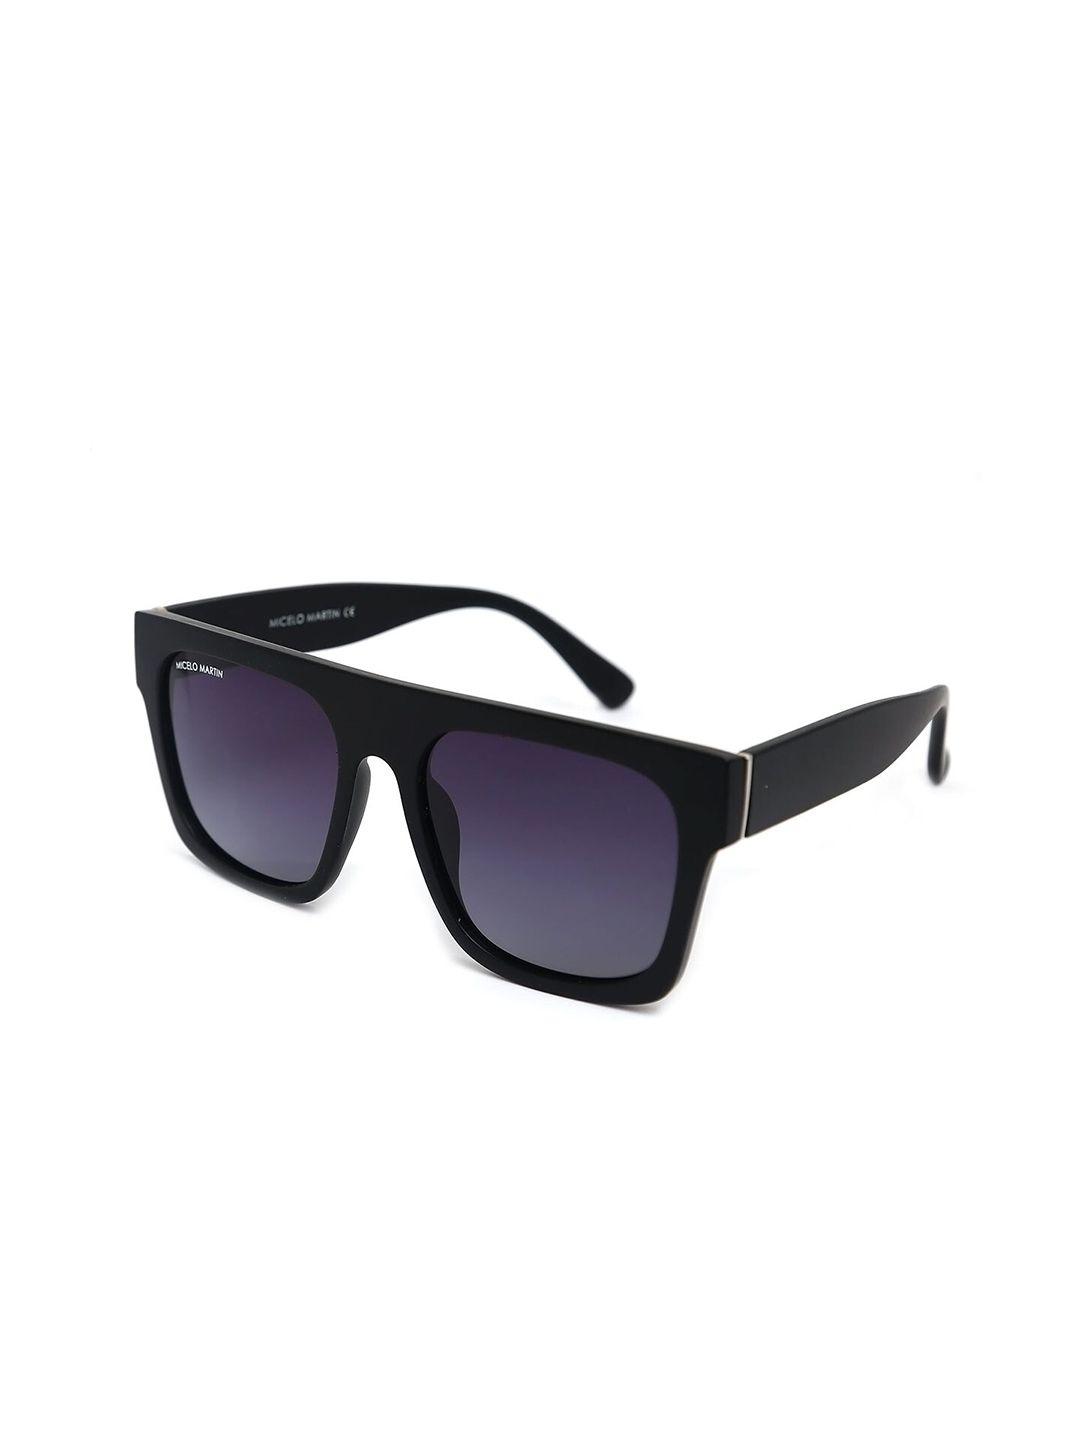 micelo martin men grey lens & black wayfarer sunglasses with uv protected lens